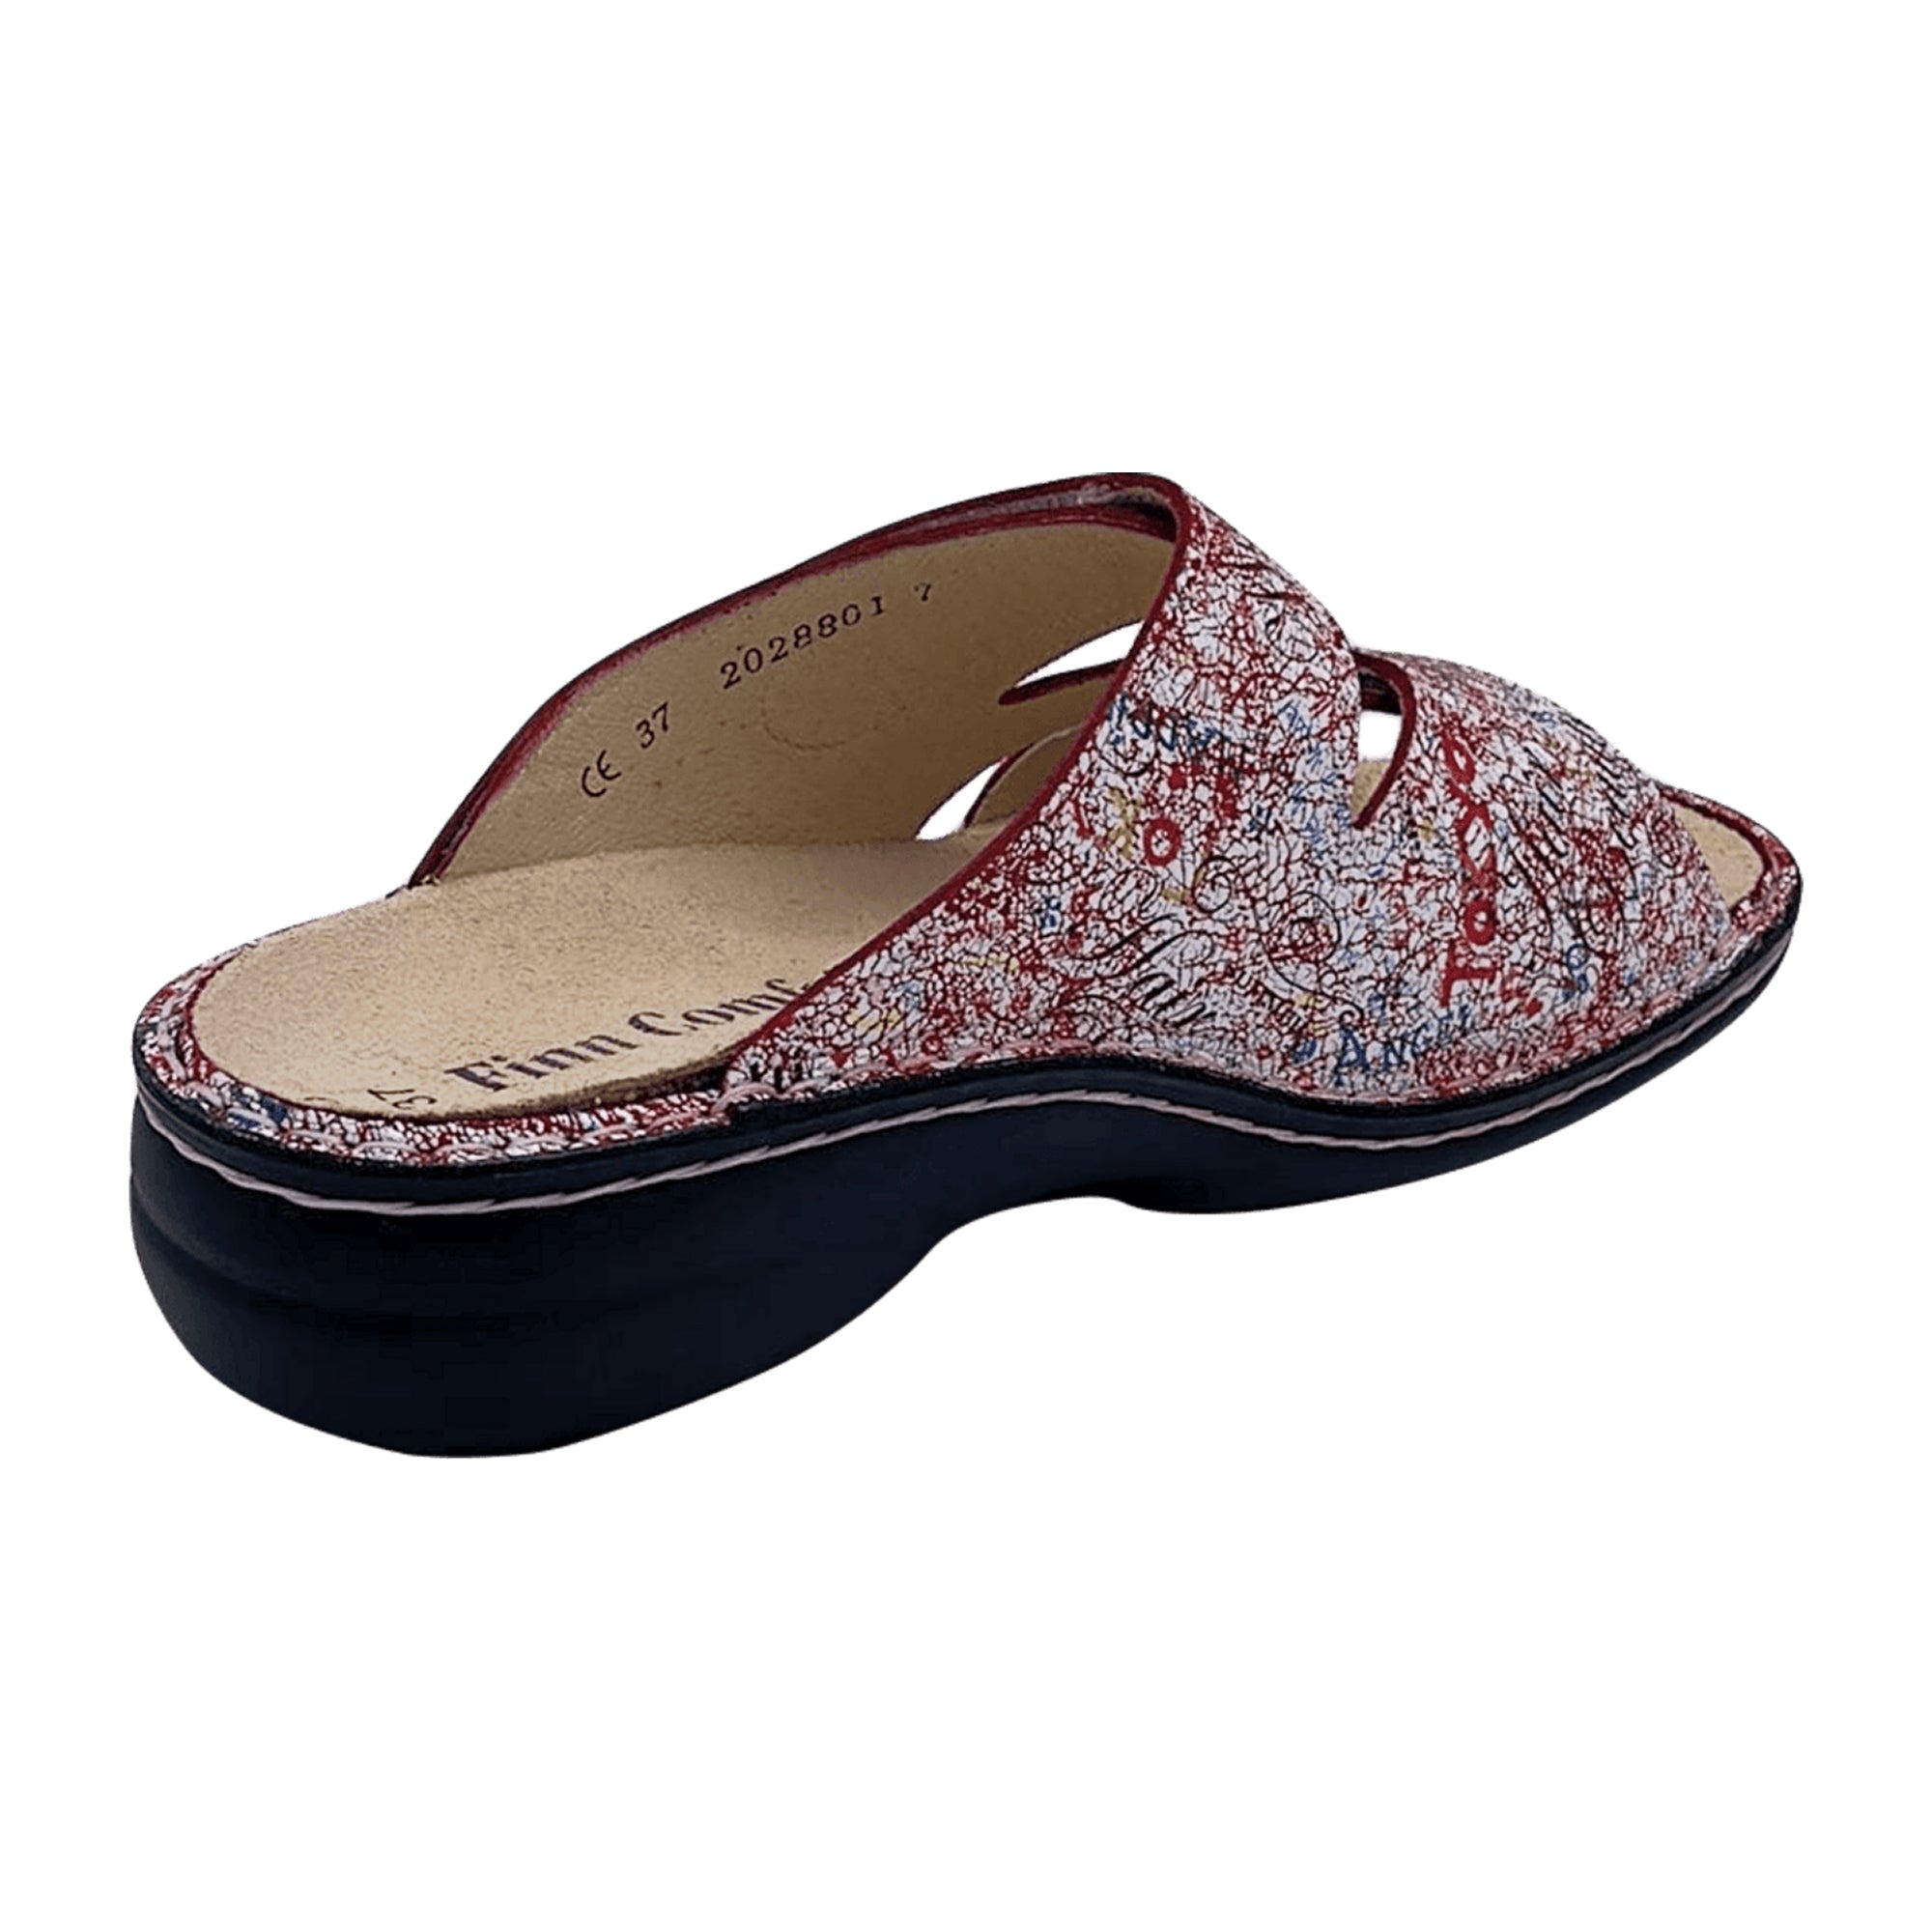 Finn Comfort Torbole Women's Comfort Sandals - Colorful, Stylish & Durable